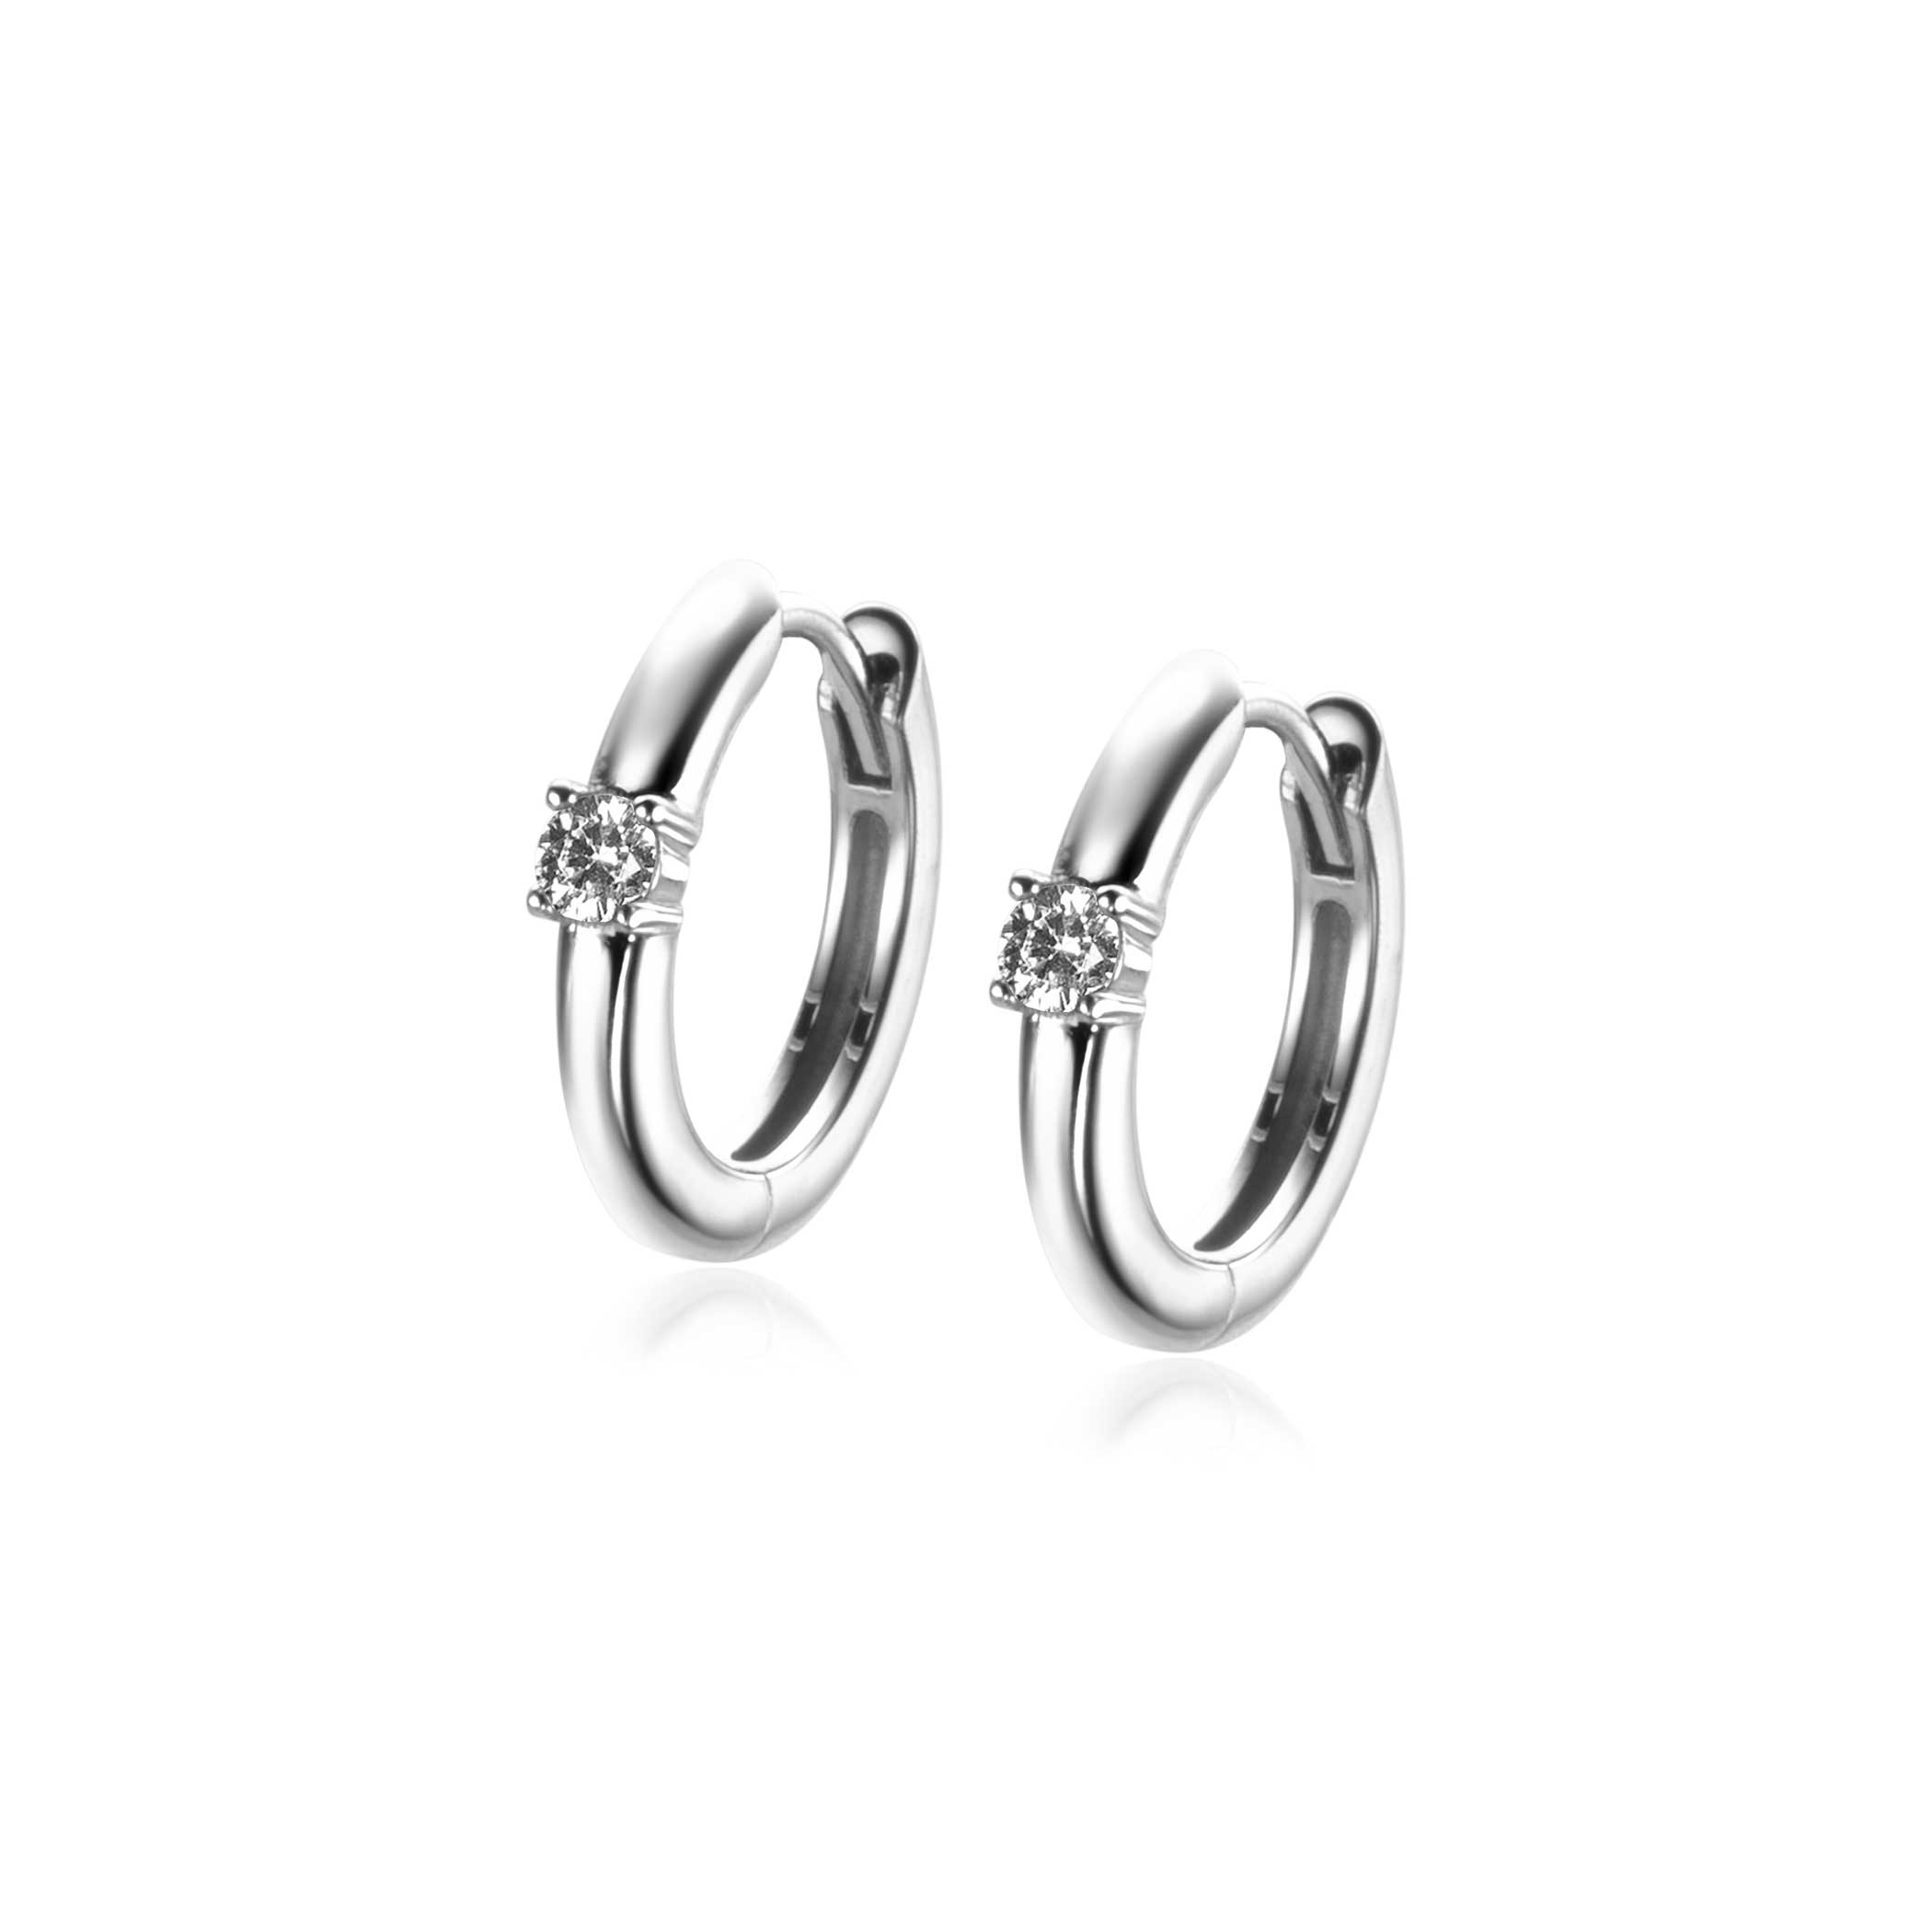 APRIL Hoop Earrings 13mm Sterling Silver with Birthstone Diamond White Zirconia